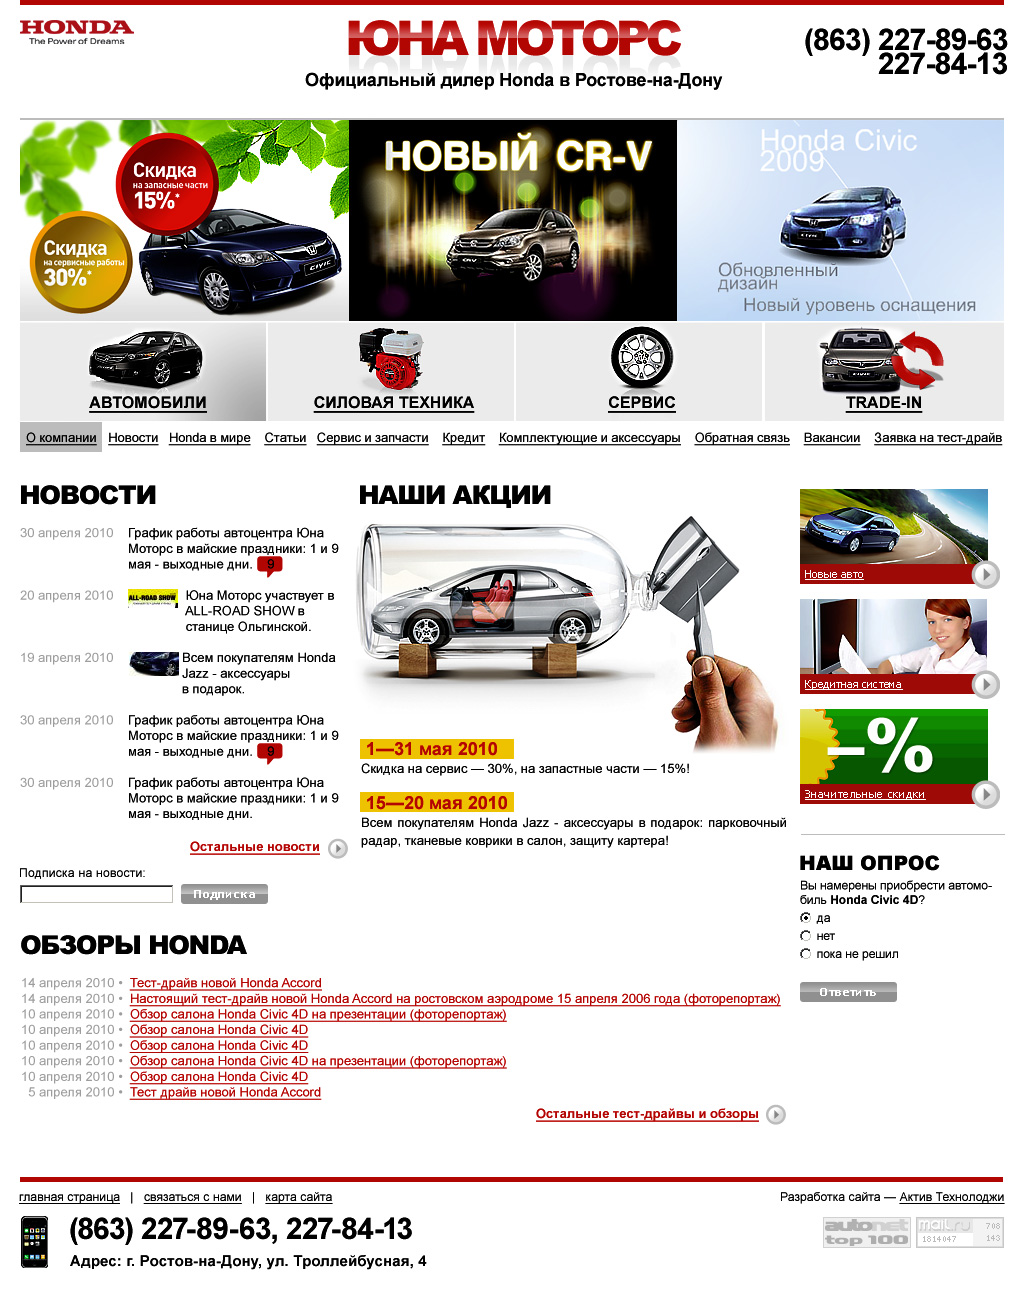 Second version site of the official Honda dealer in Rostov-on-Don - UNA Motors